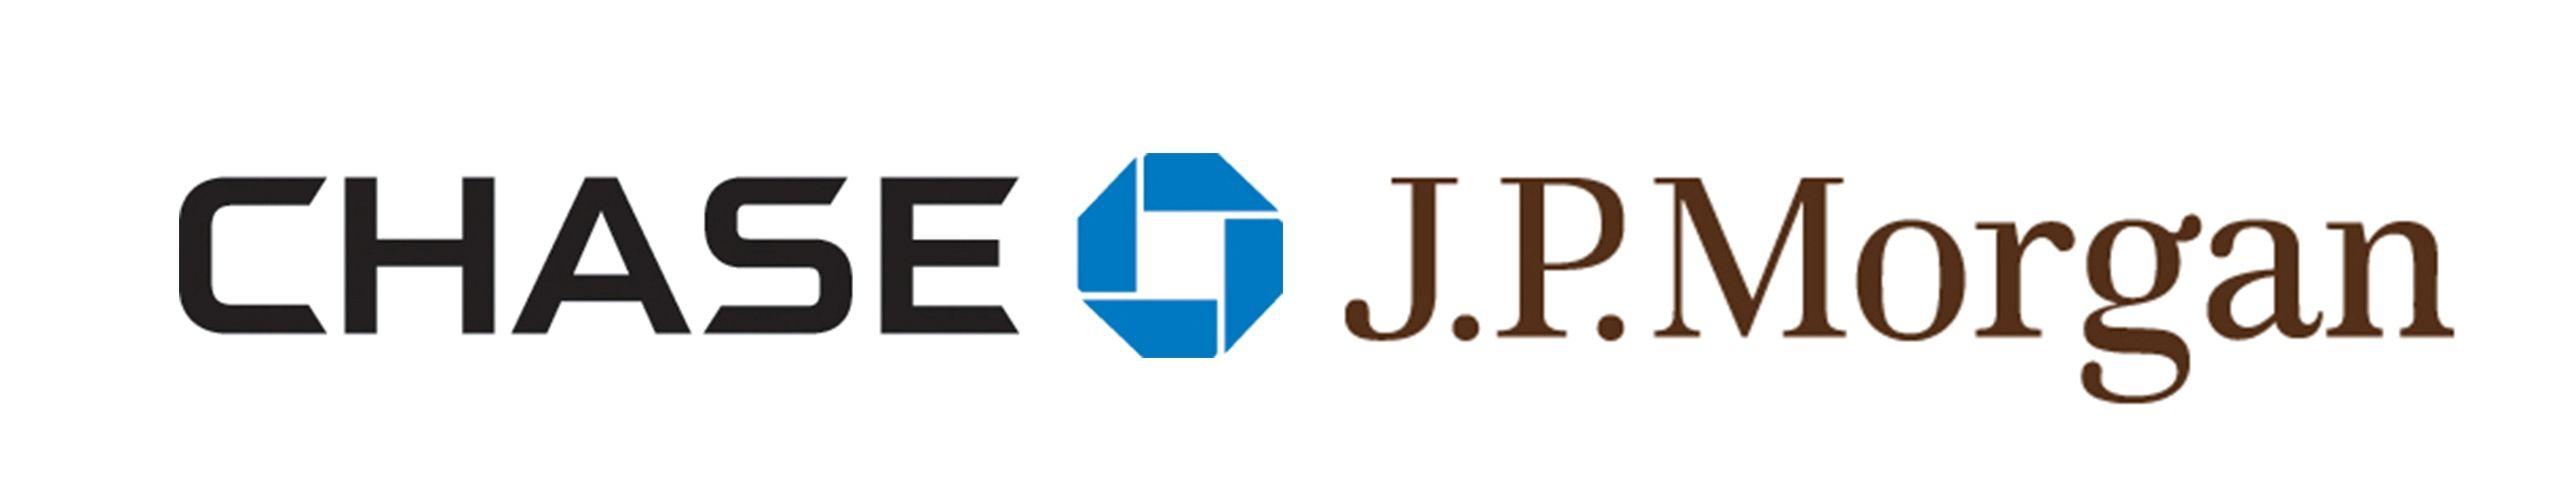 JPMorgan Chase Logo - Jp morgan chase Logos